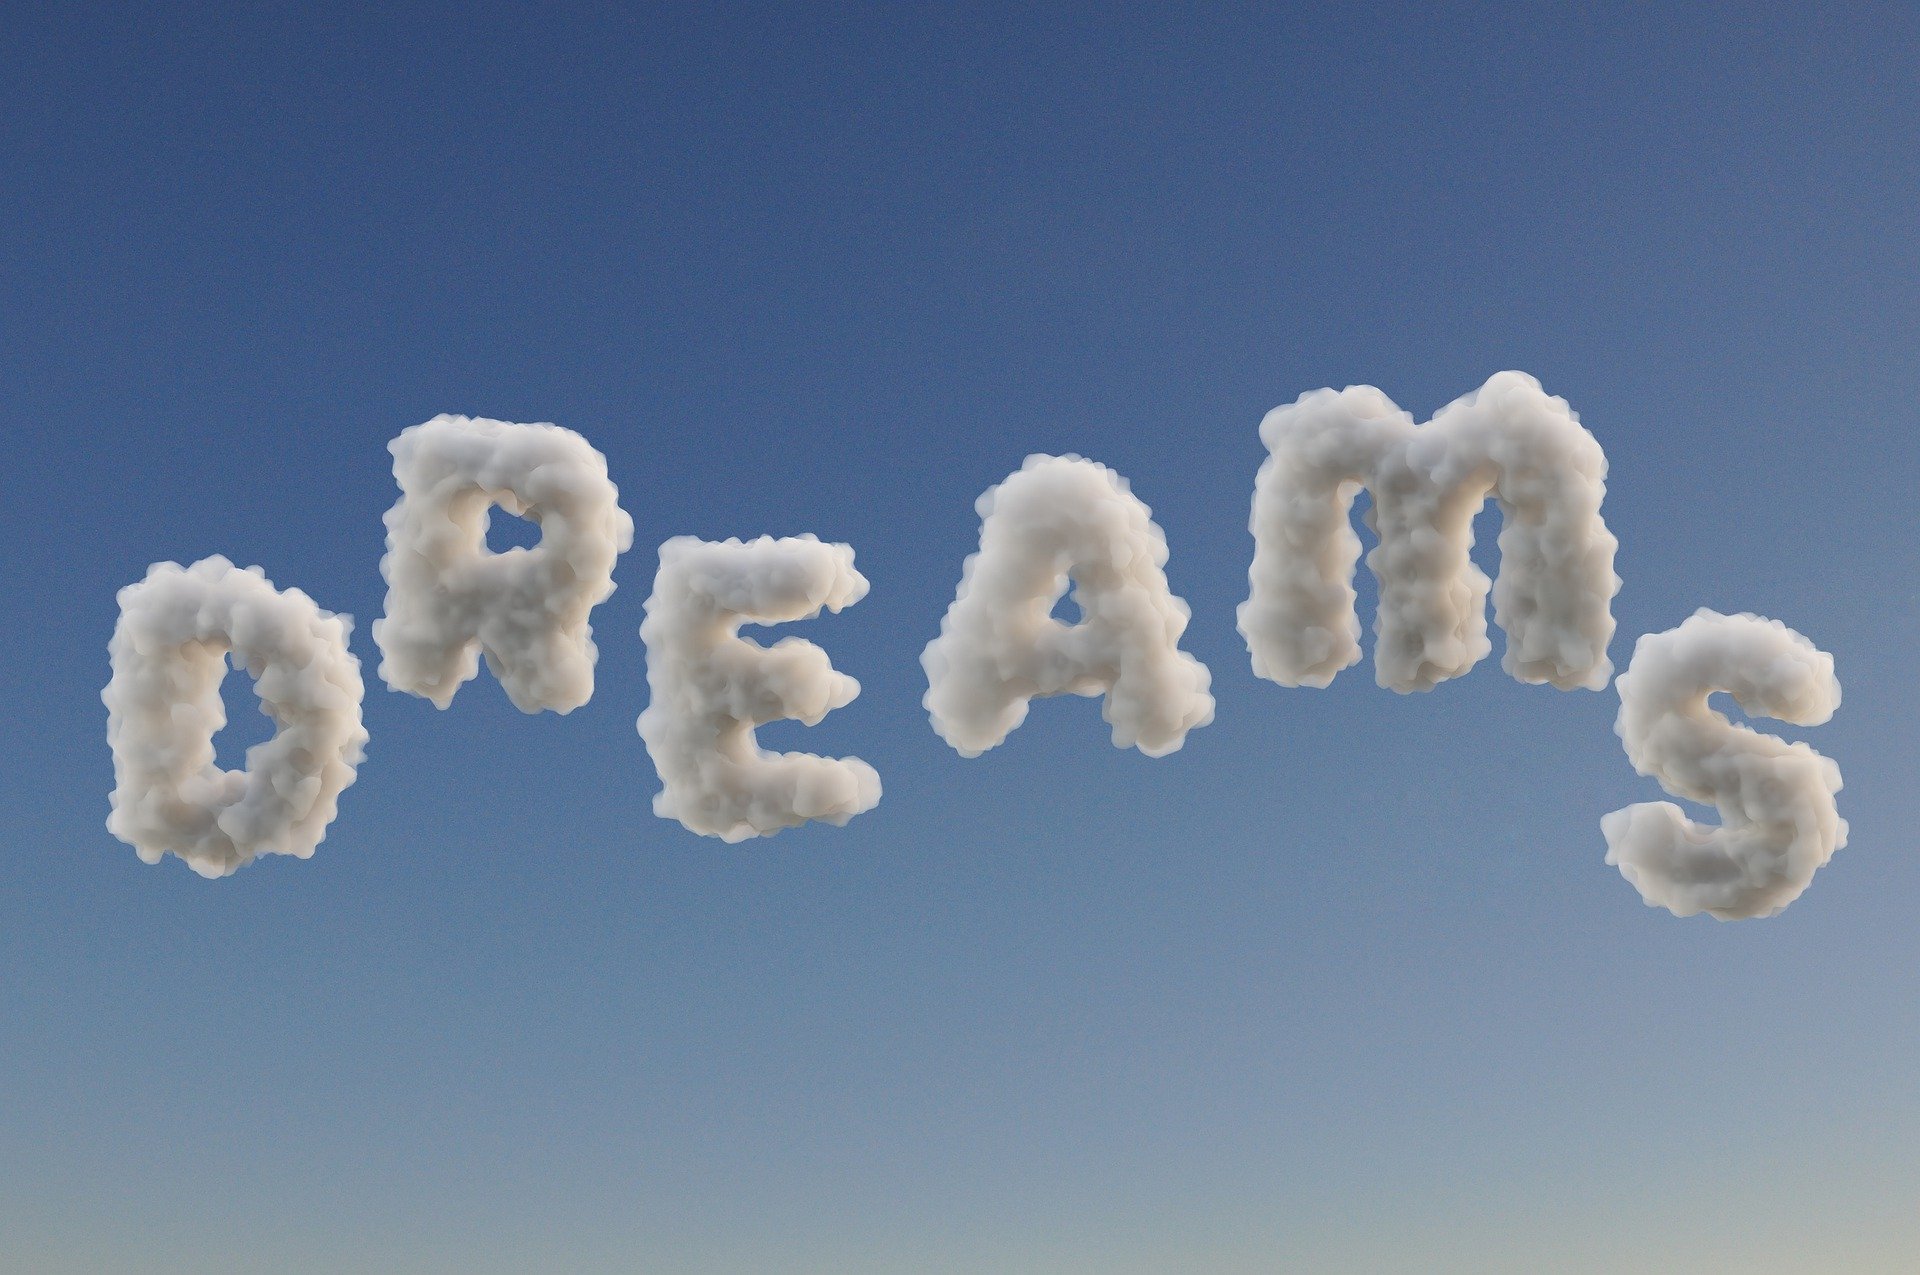 dream-g7953fe0ed_1920 (c) BiljaST (www.pixabay.de)